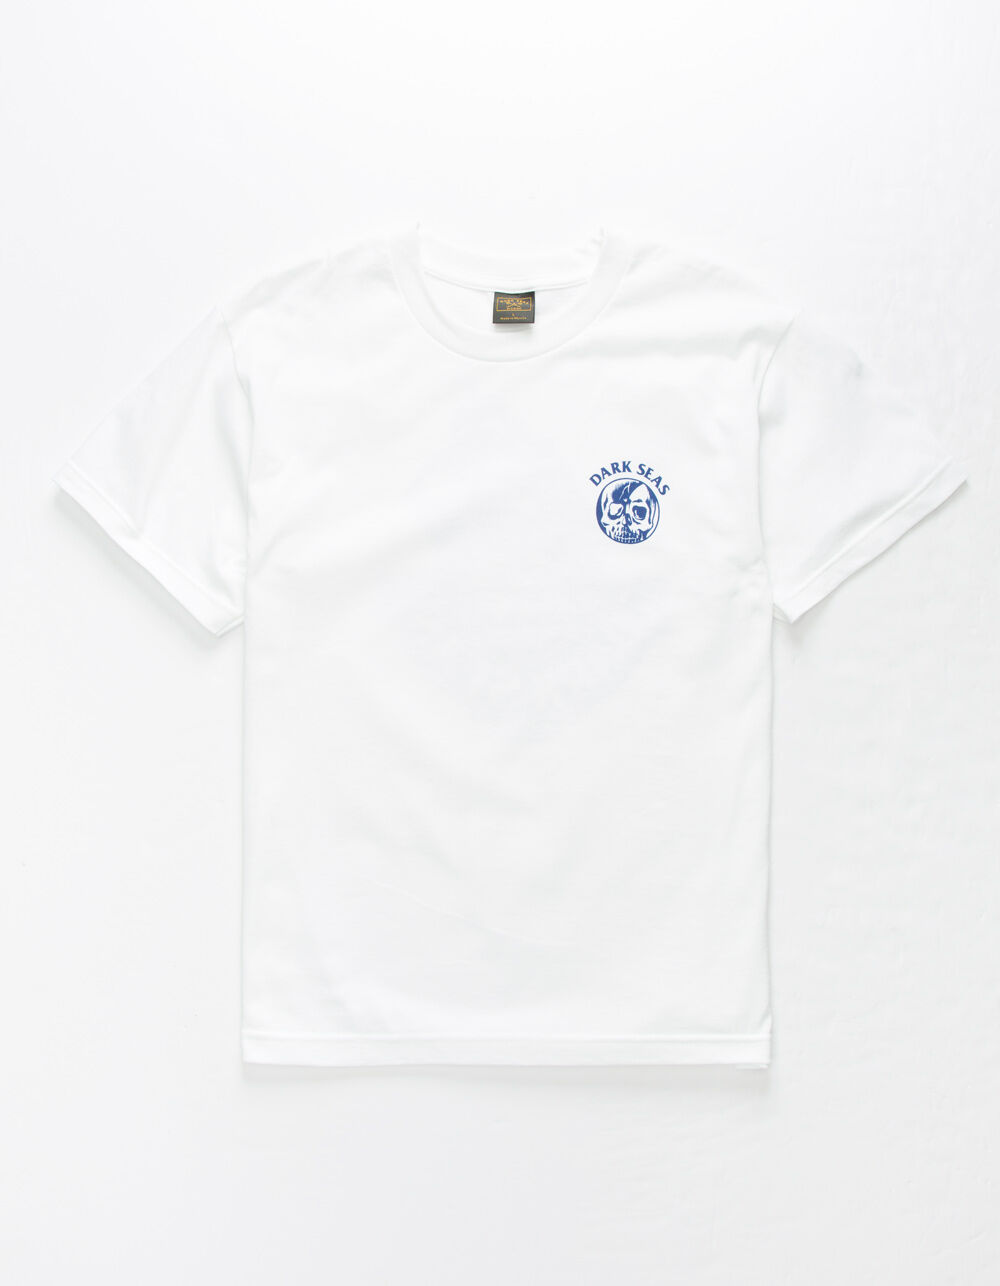 DARK SEAS Maven Boys T-Shirt image number 1